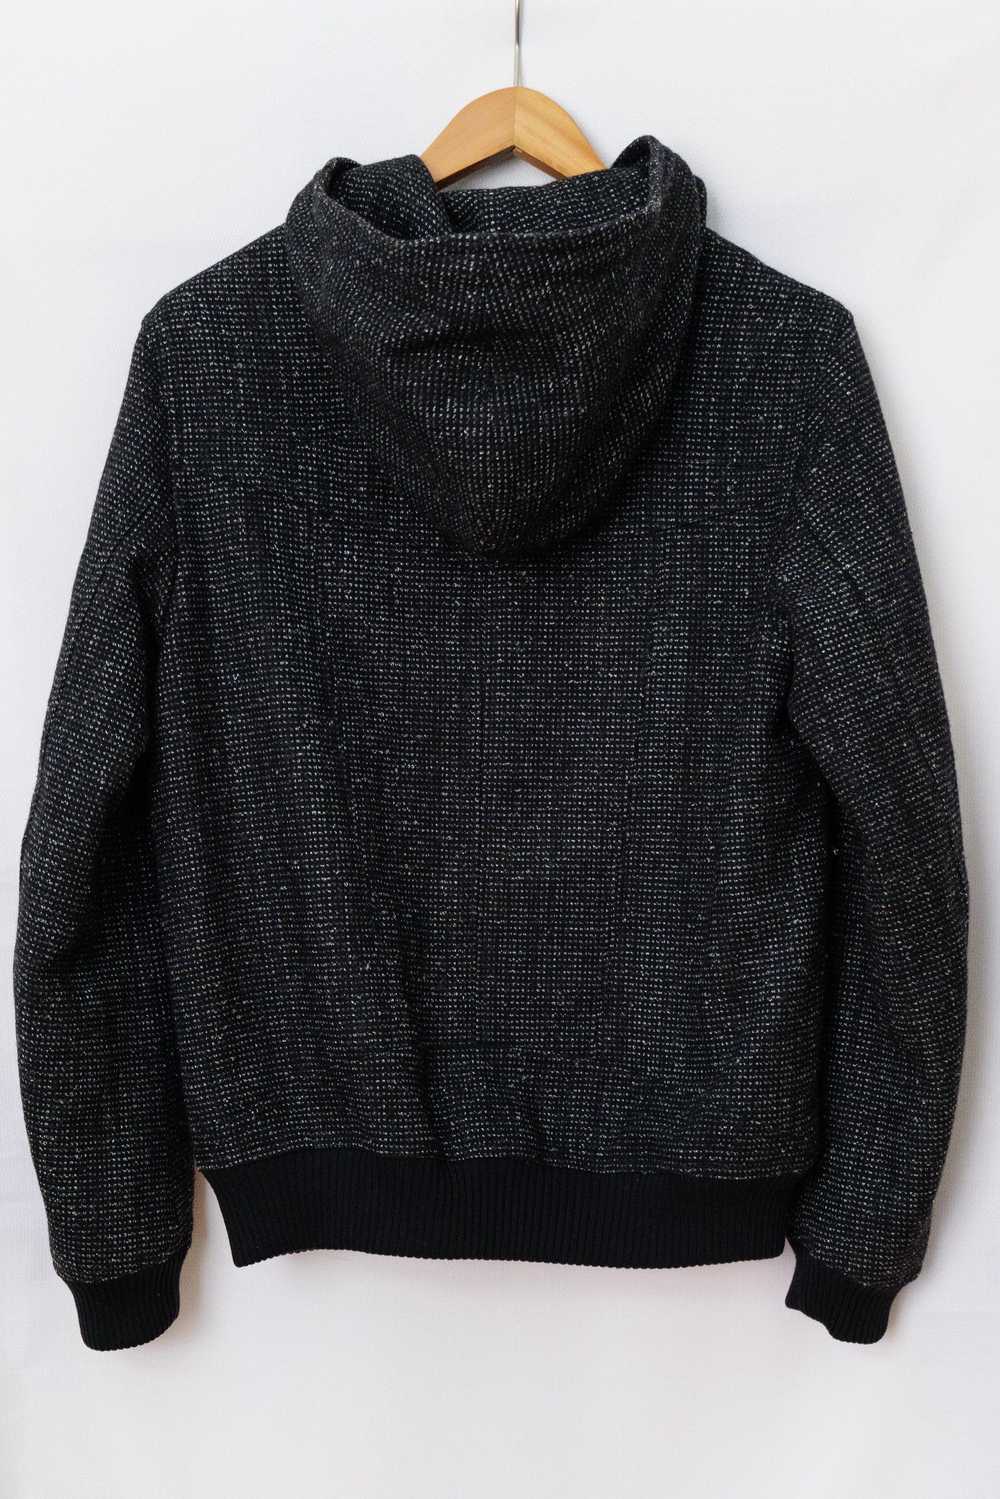 Dior tweed jacket - image 2